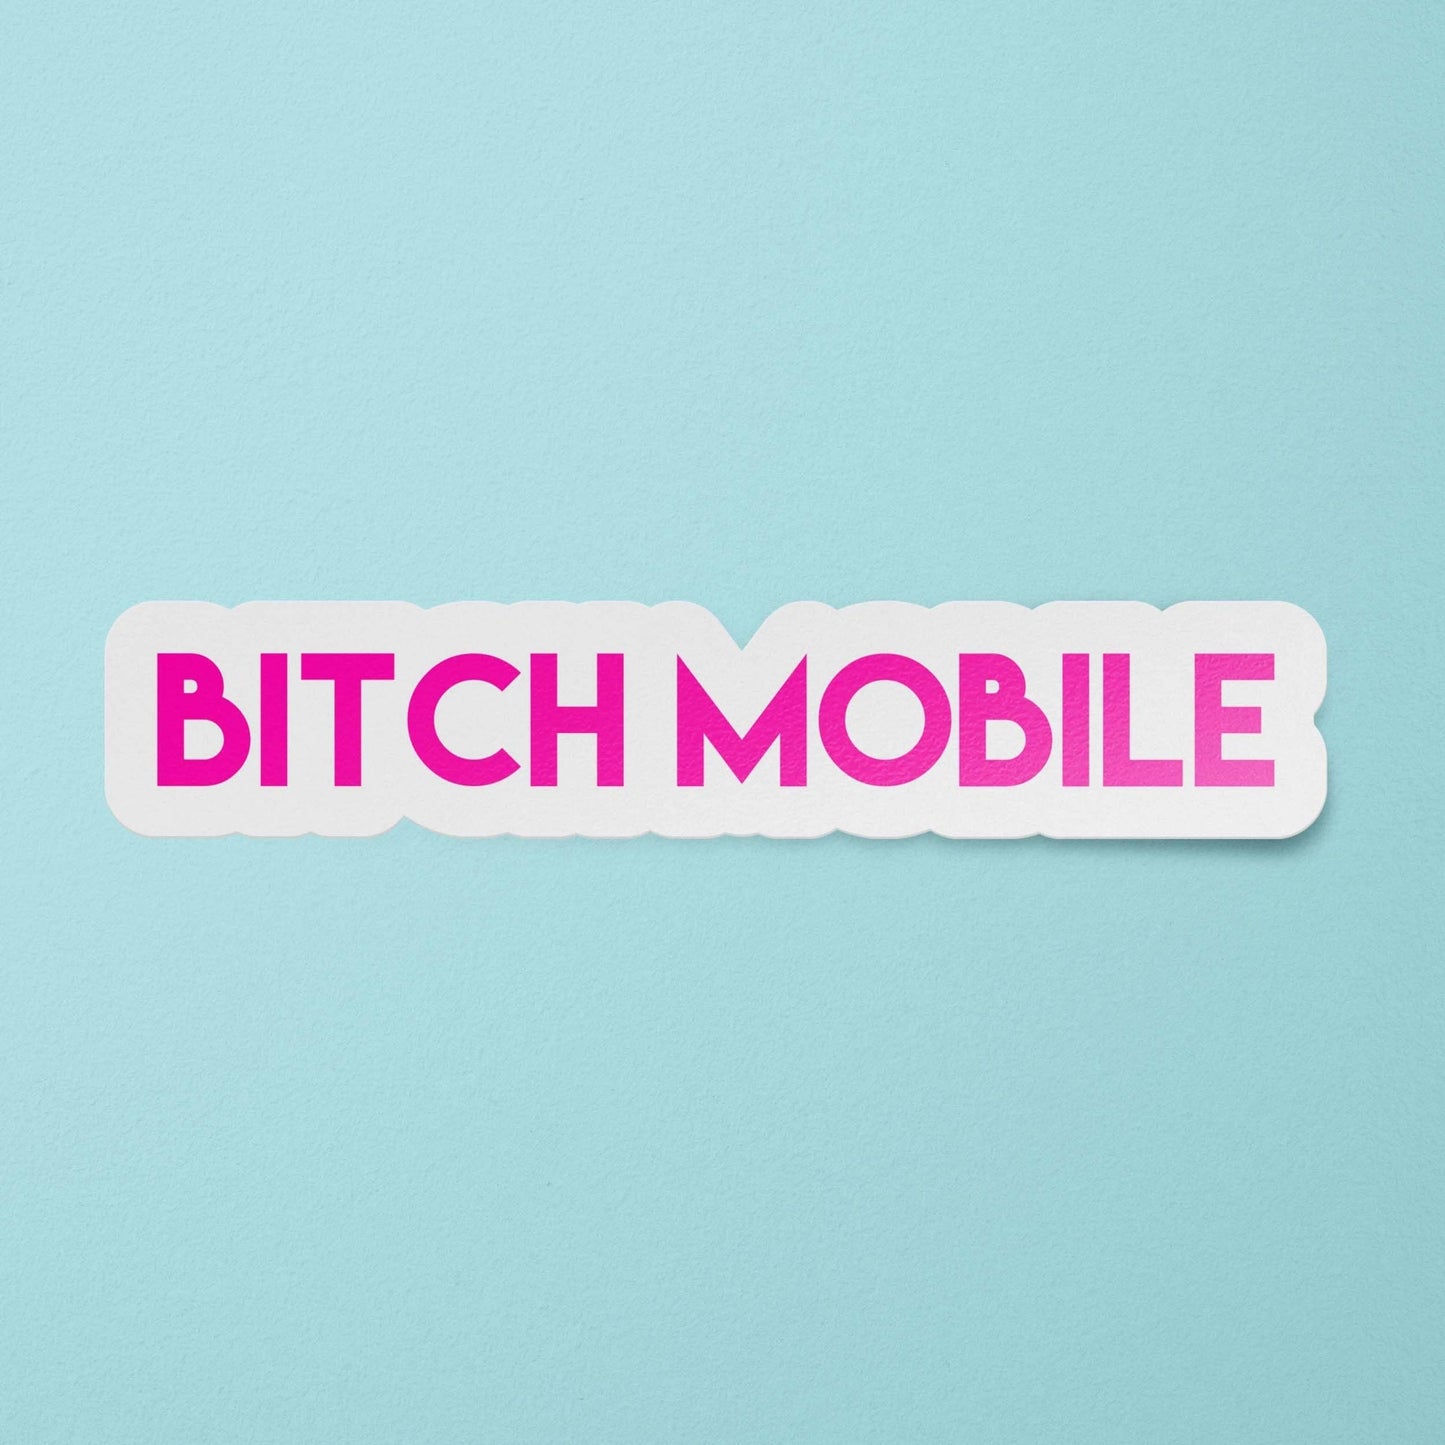 Bitch Mobile Bumper Sticker | Funny Bumper Sticker: Matte / 8 inches